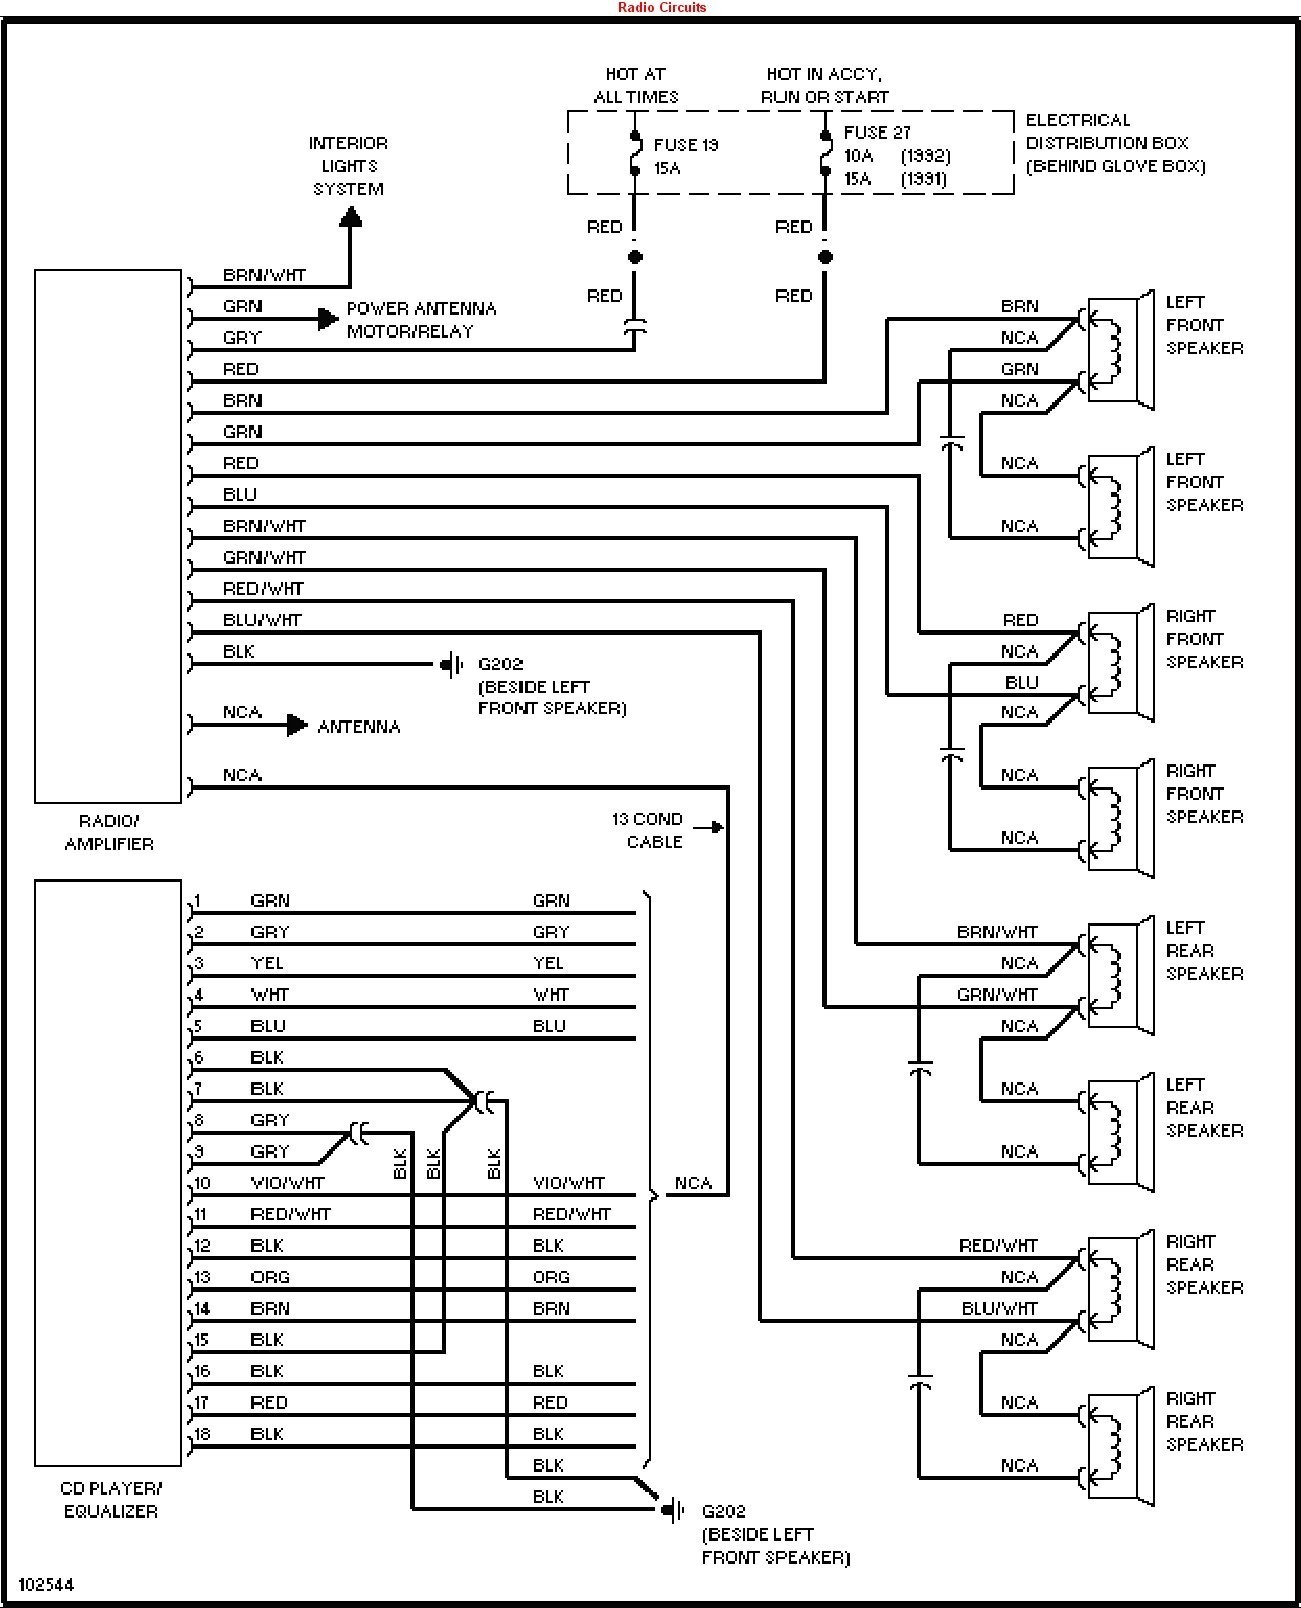 1995 Jeep Cherokee Engine Diagram 2008 Jeep Grand Cherokee Wiring Diagram Wiring Diagram toolbox Of 1995 Jeep Cherokee Engine Diagram